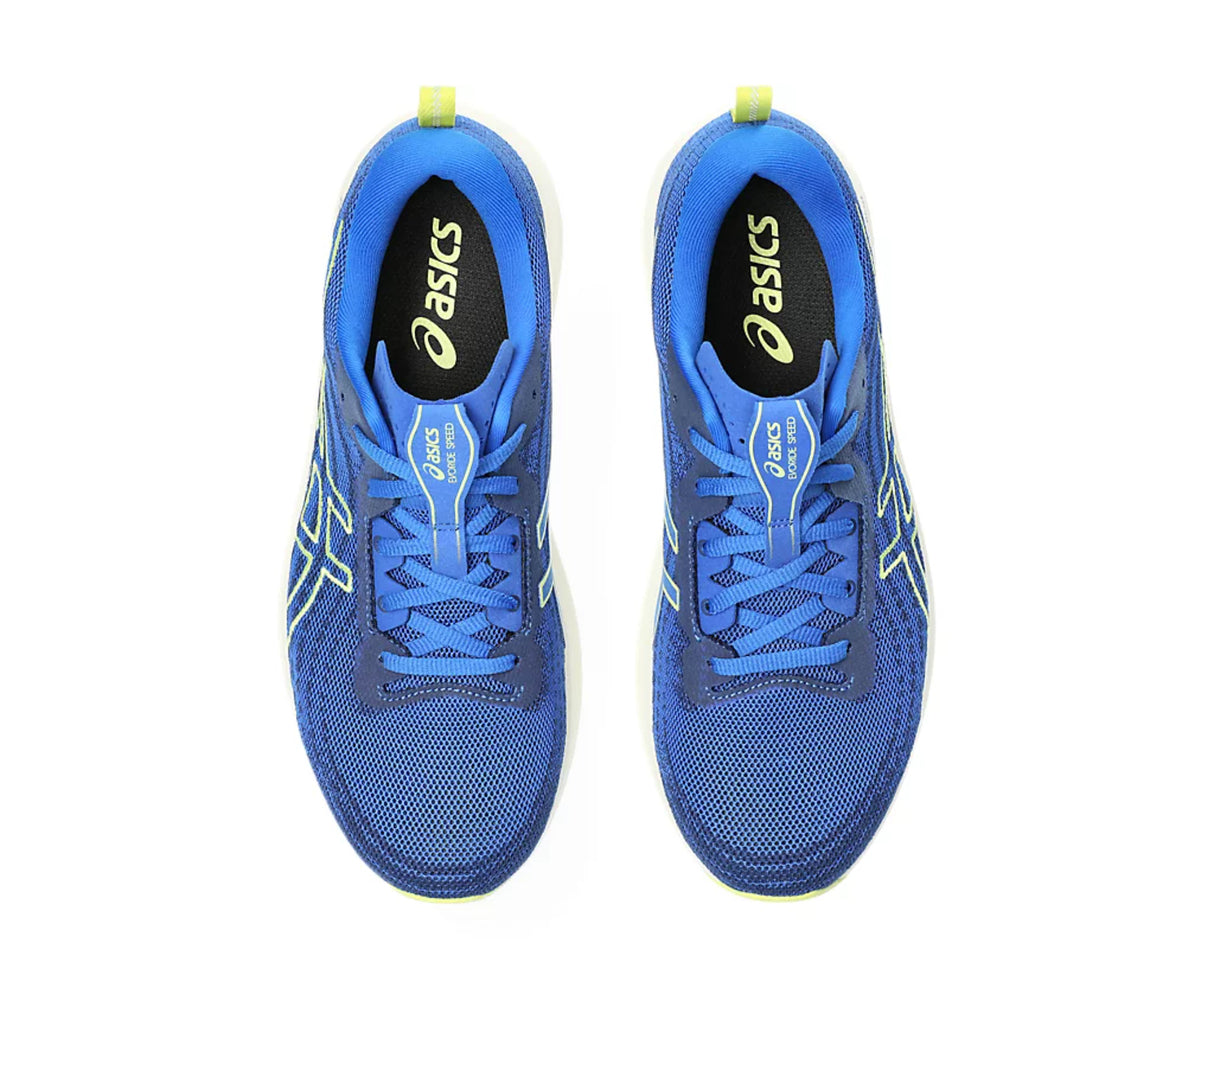 Asics EVORIDE SPEED Sports Running Shoes Illusion Blue/Glow Yellow 1011B612